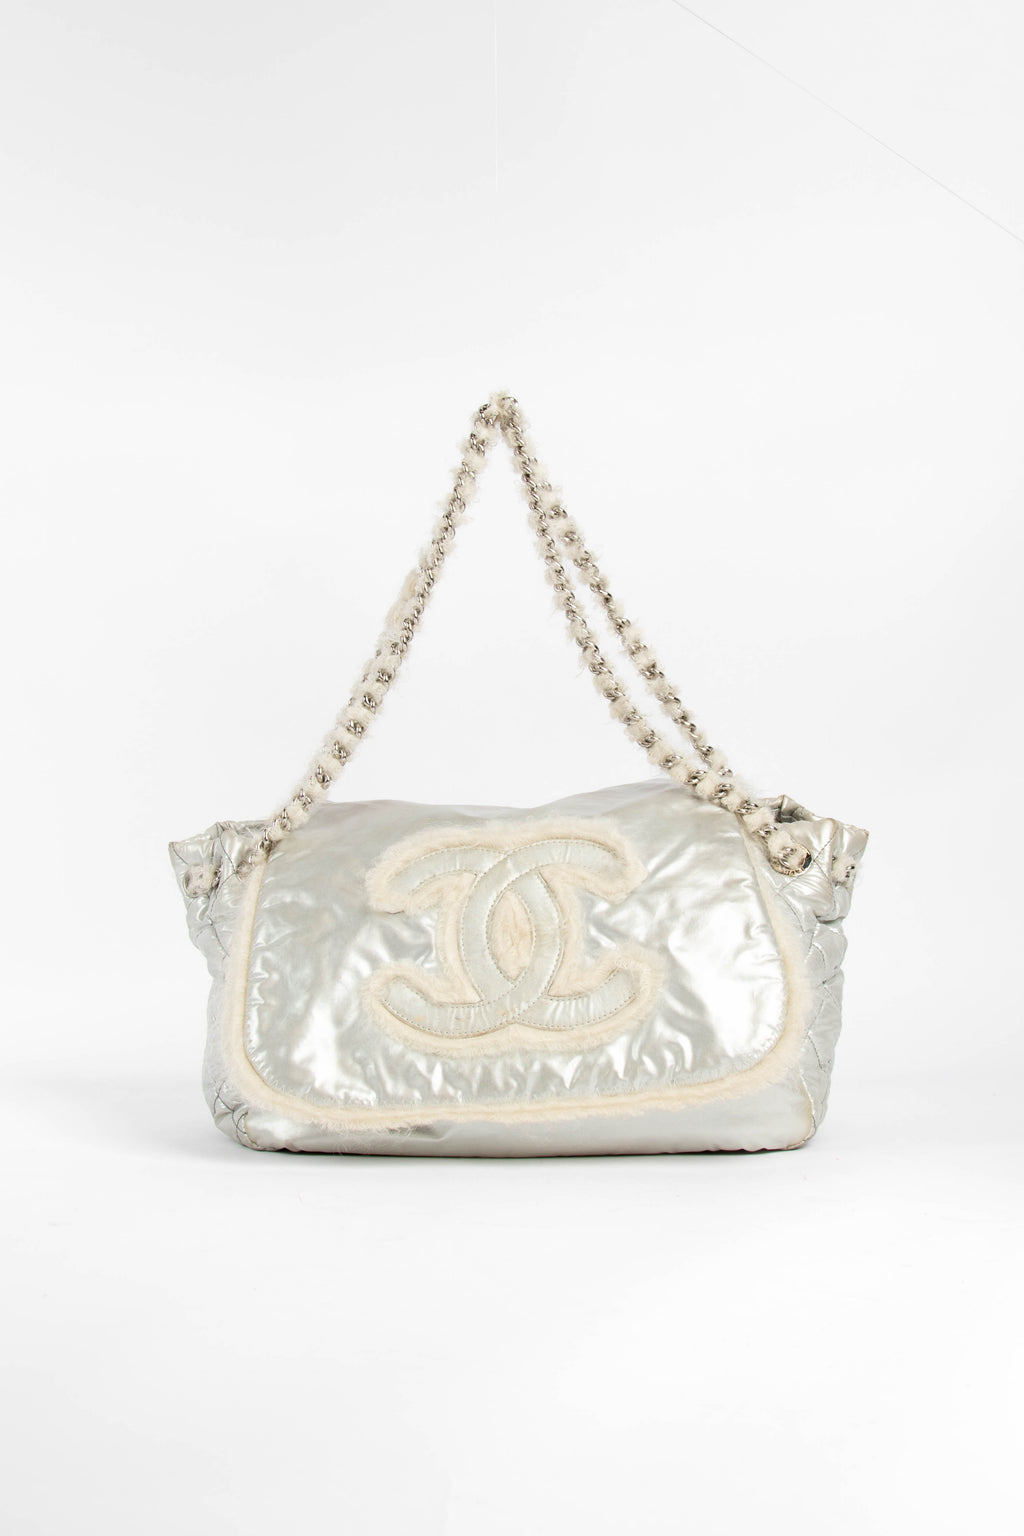 2010s Chanel Silver CC Accordion Flap Shoulder Bag